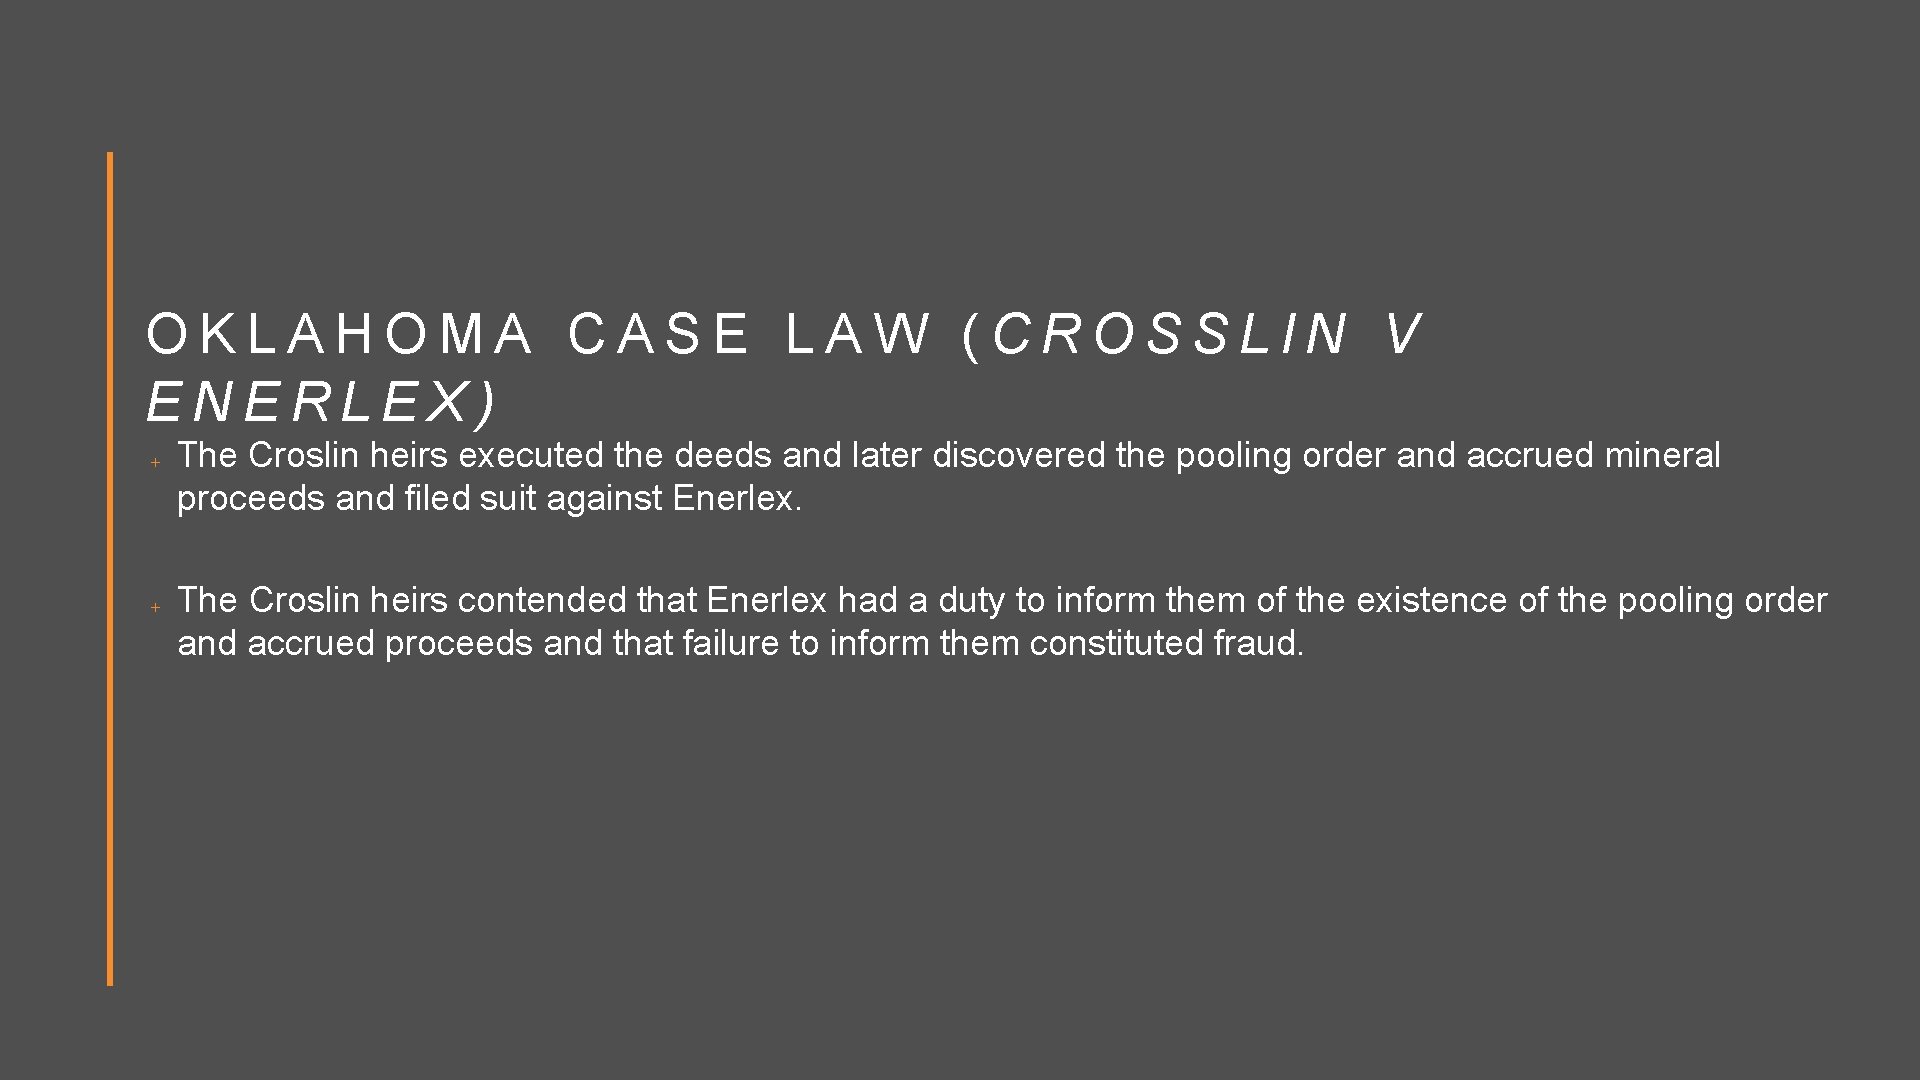 OKLAHOMA CASE LAW (CROSSLIN V ENERLEX) The Croslin heirs executed the deeds and later